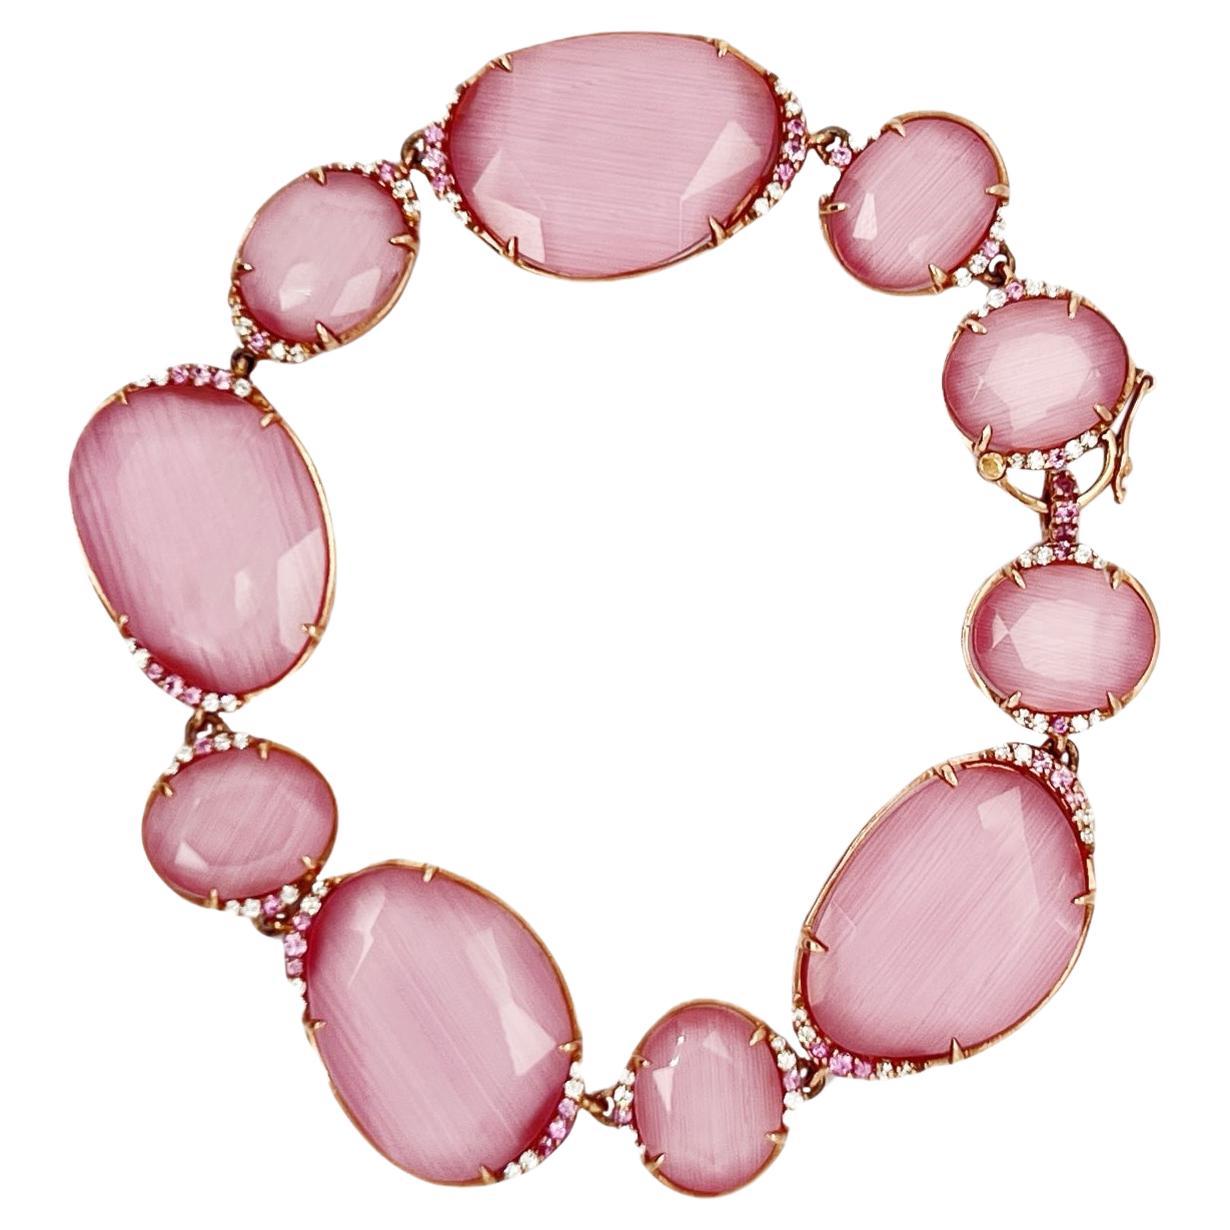 9k gold Bracelet in doublets (rock crystal & fiber) in pink sapphires & diamonds